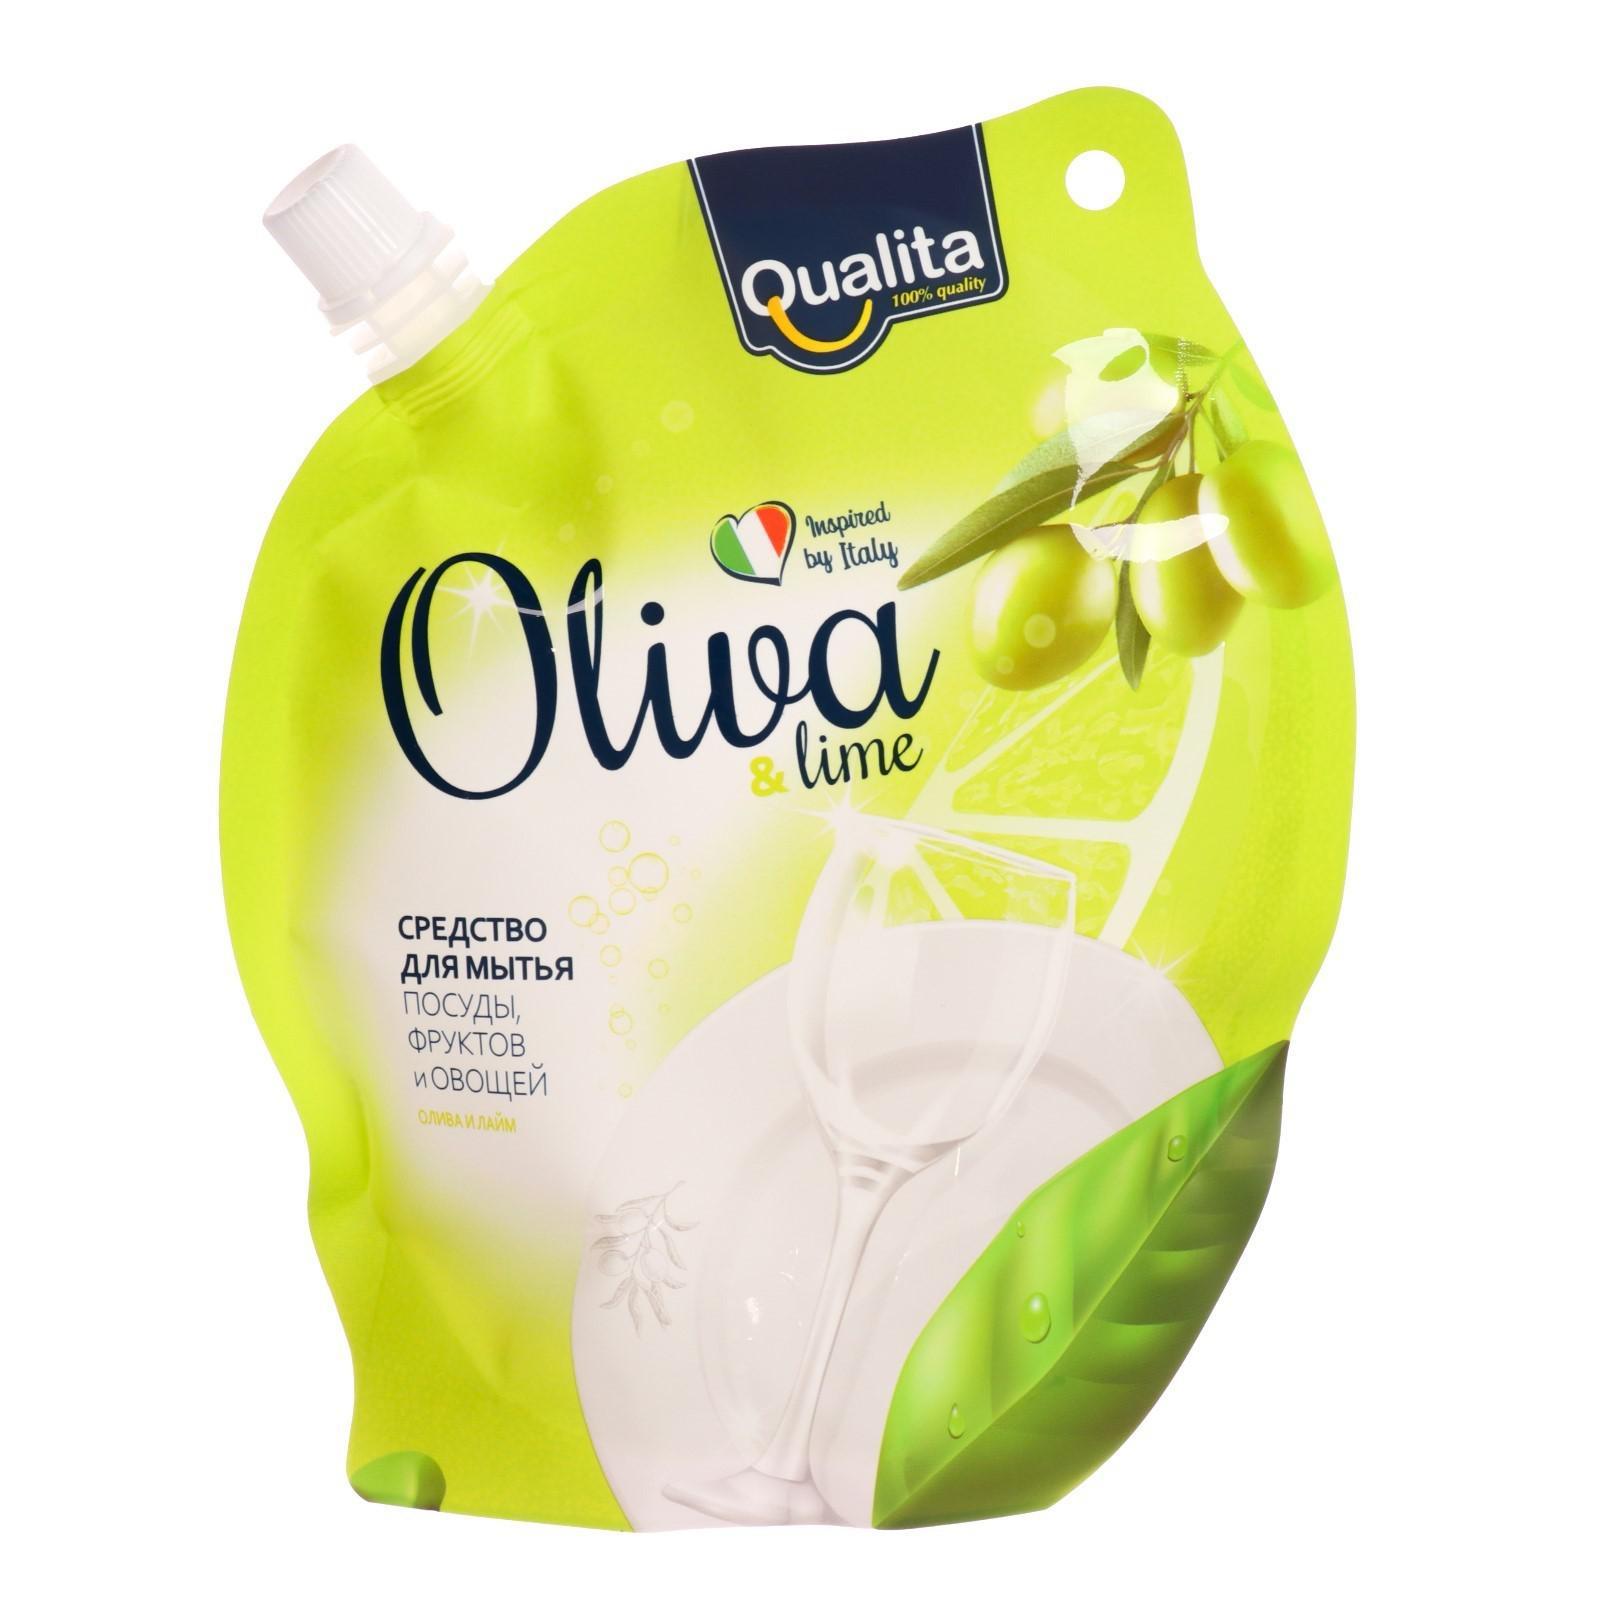 фото Средство для мытья посуды qualita olive-lime 450 мл